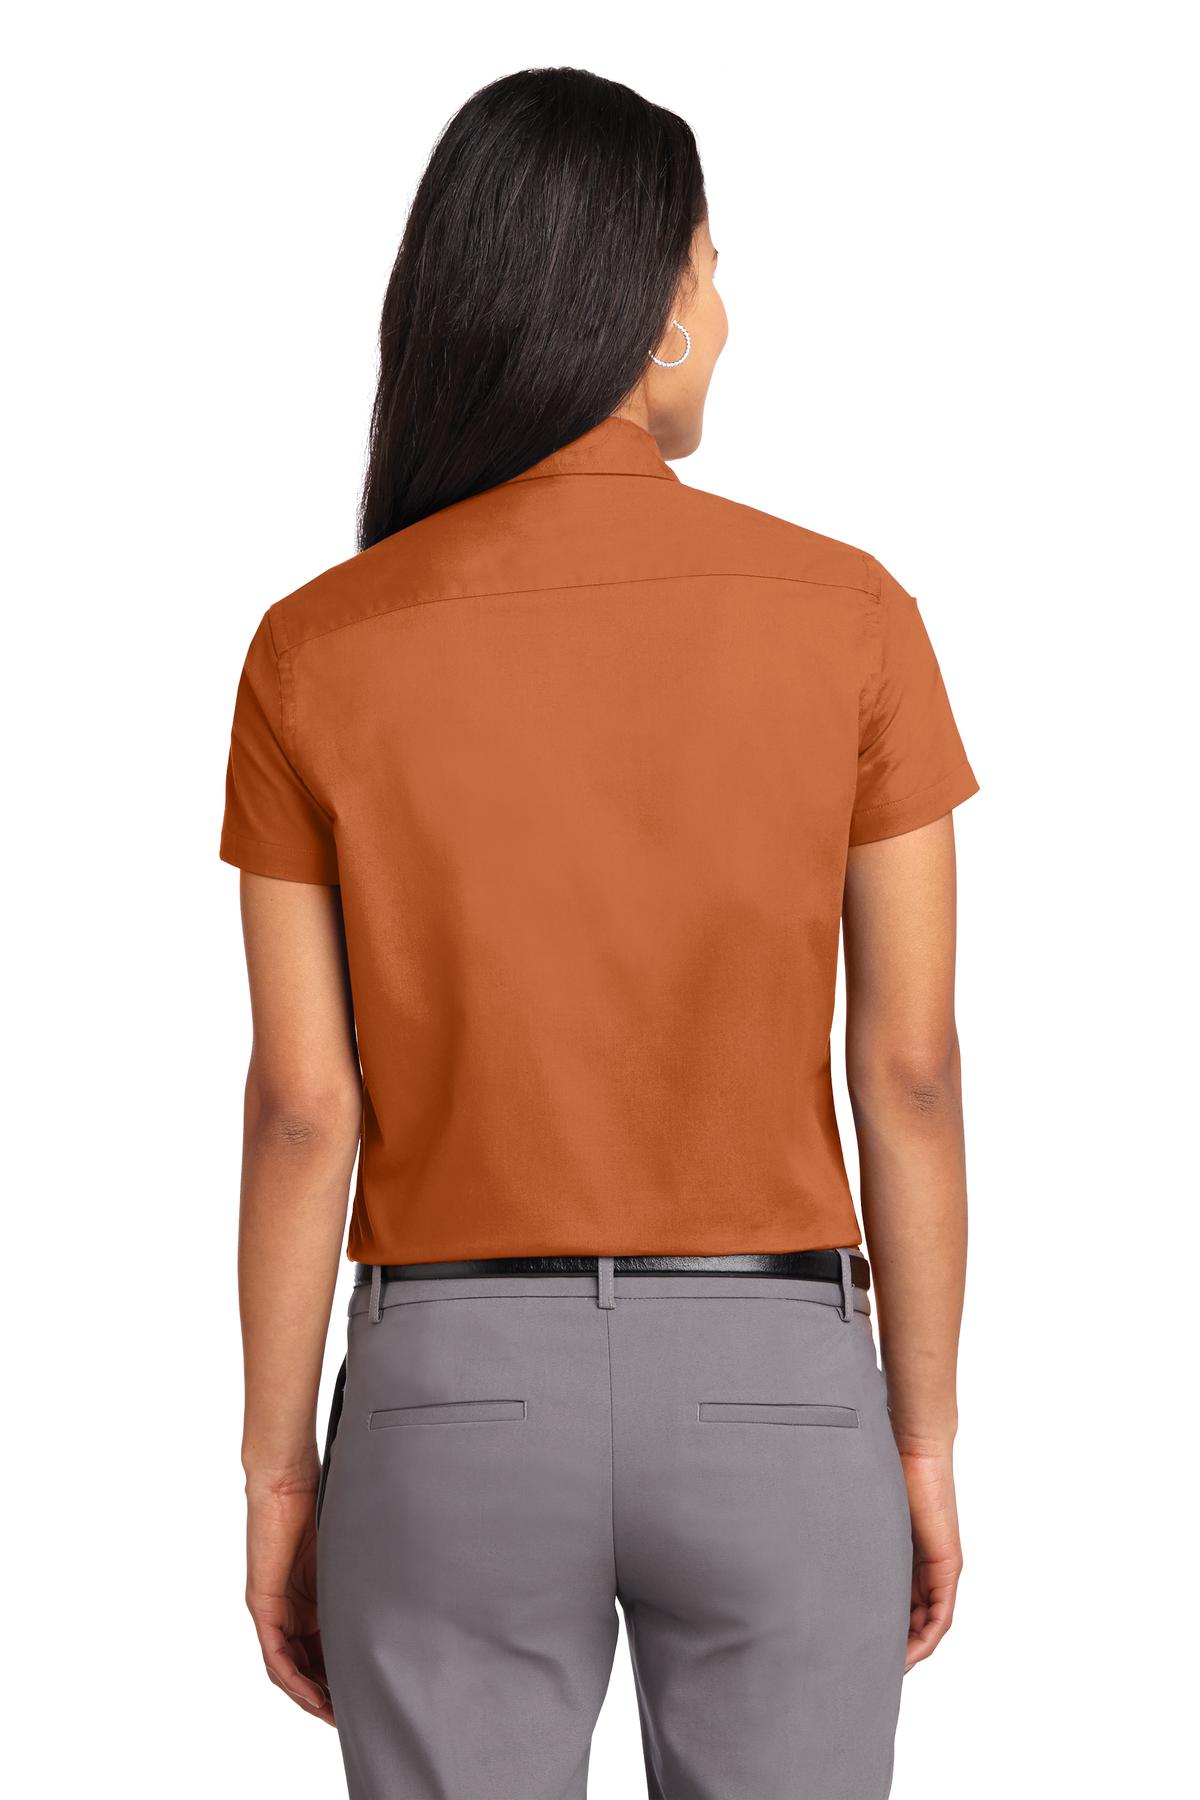 Port Authority Ladies Short Sleeve Easy Care Shirt-XS (Texas Orange/Light Stone) - image 2 of 6